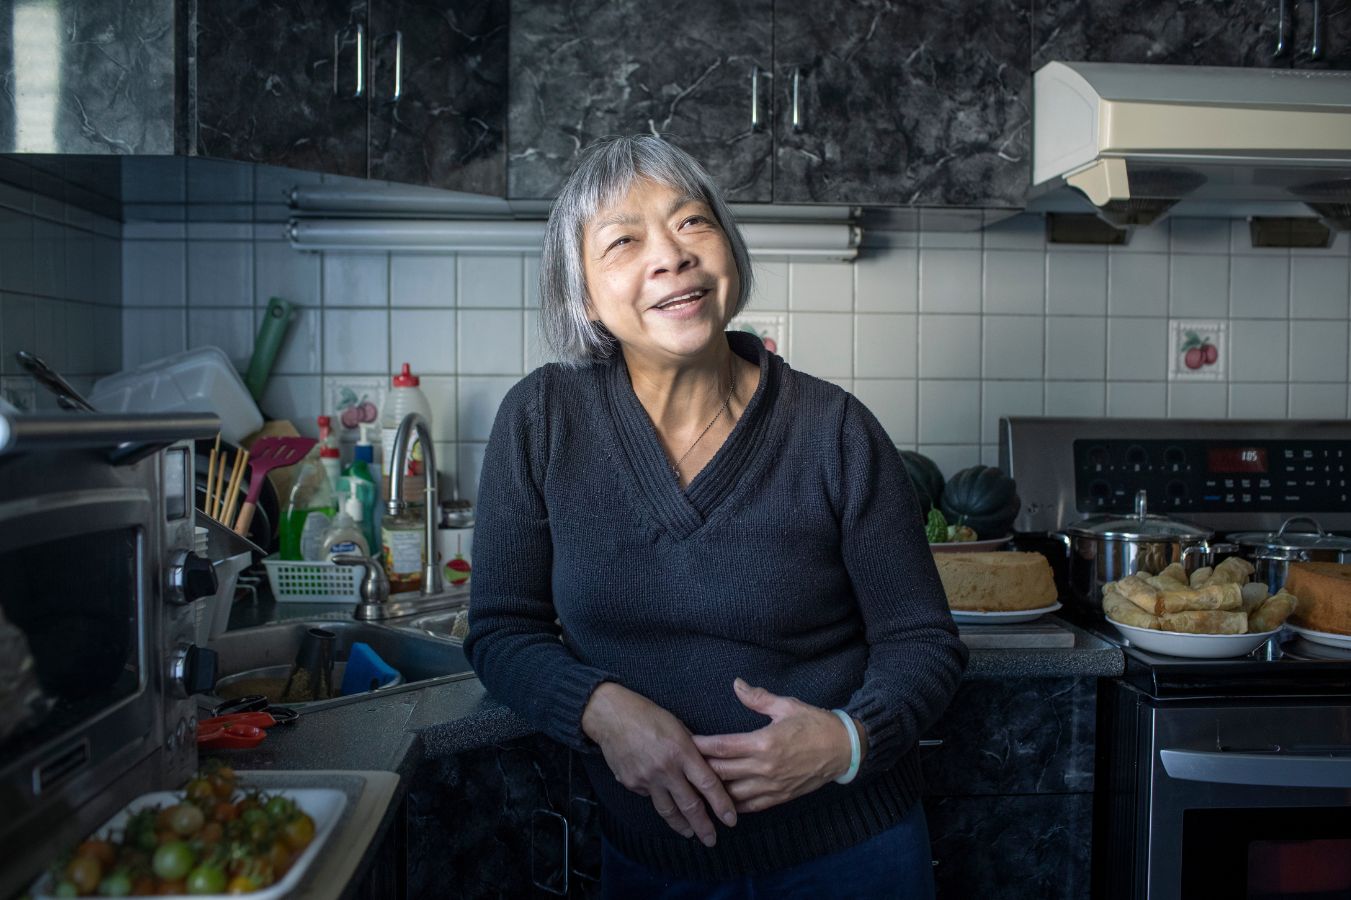 Yee-Bing Wong in her kitchen smiling while cooking